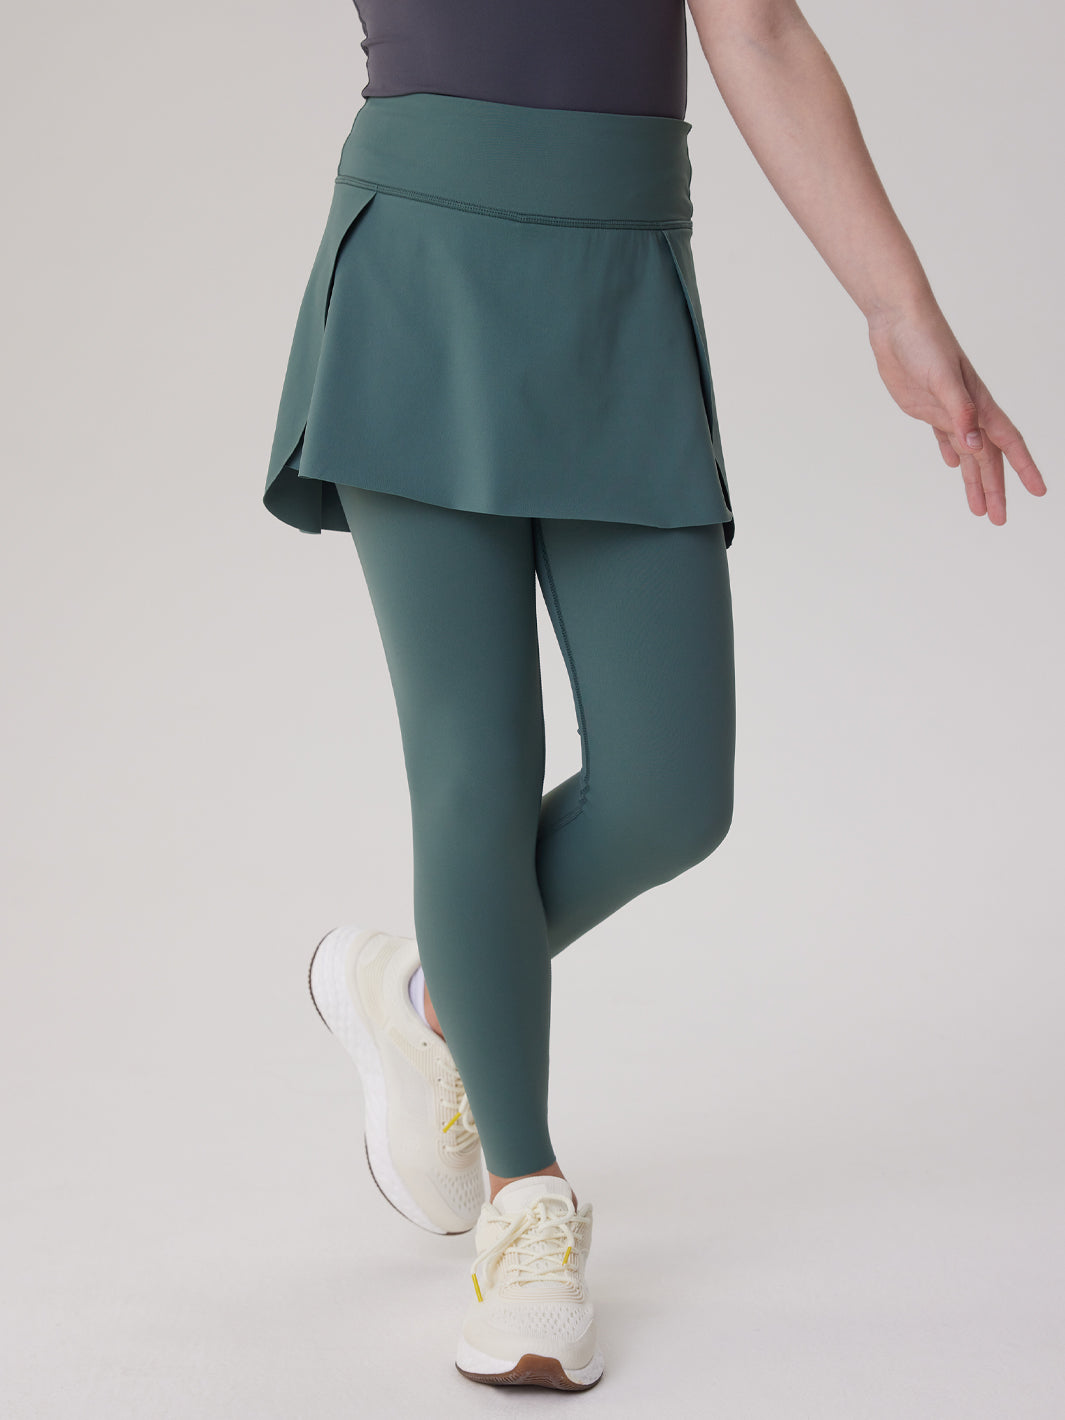 Buy Tennis Skirts with Leggings for Women Skirted Leggings with